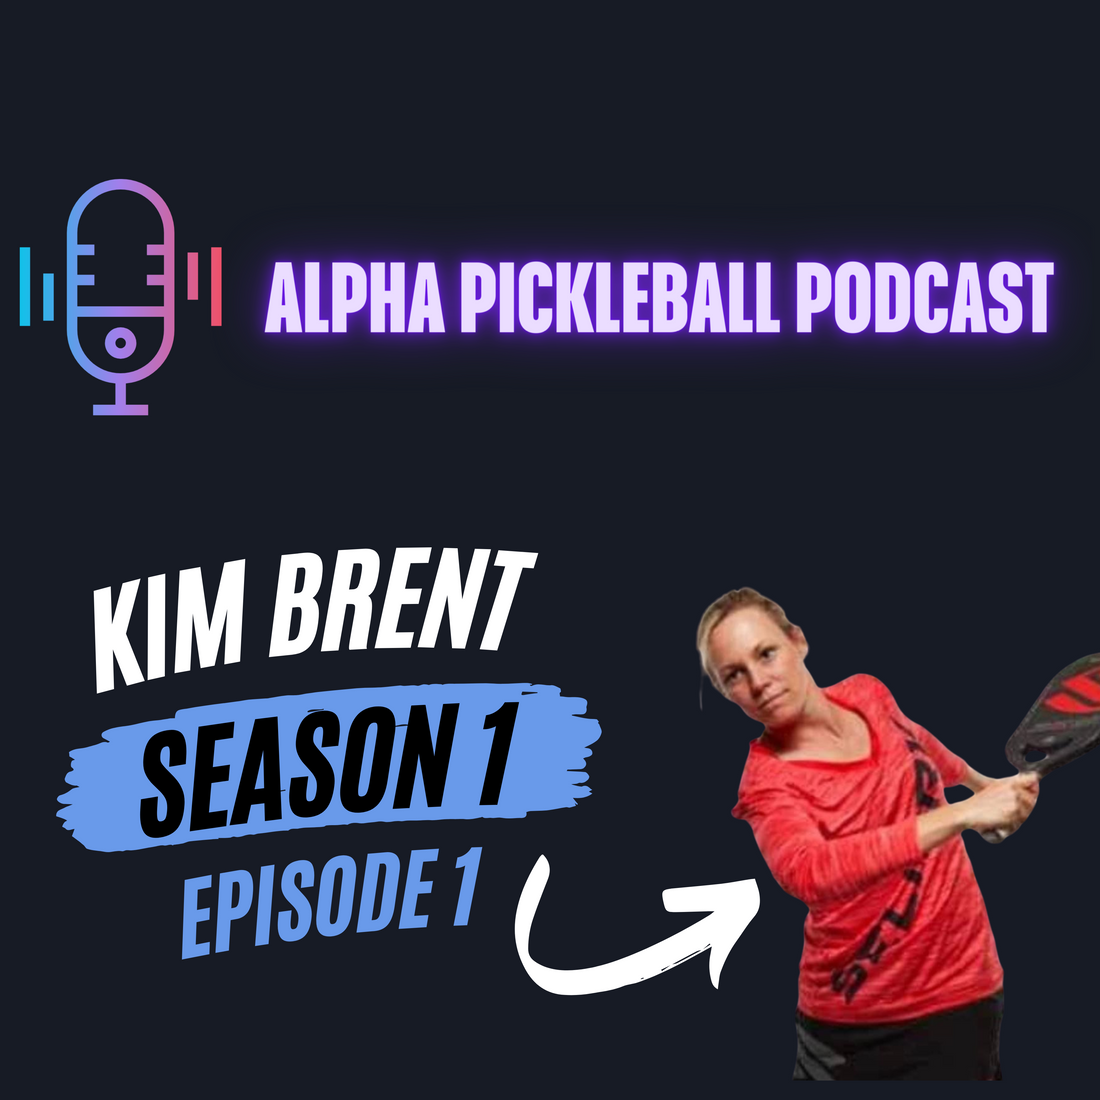 Alpha Pickleball Podcast Season 1 Episode 1 (Kim Brent Canadian National Champion)